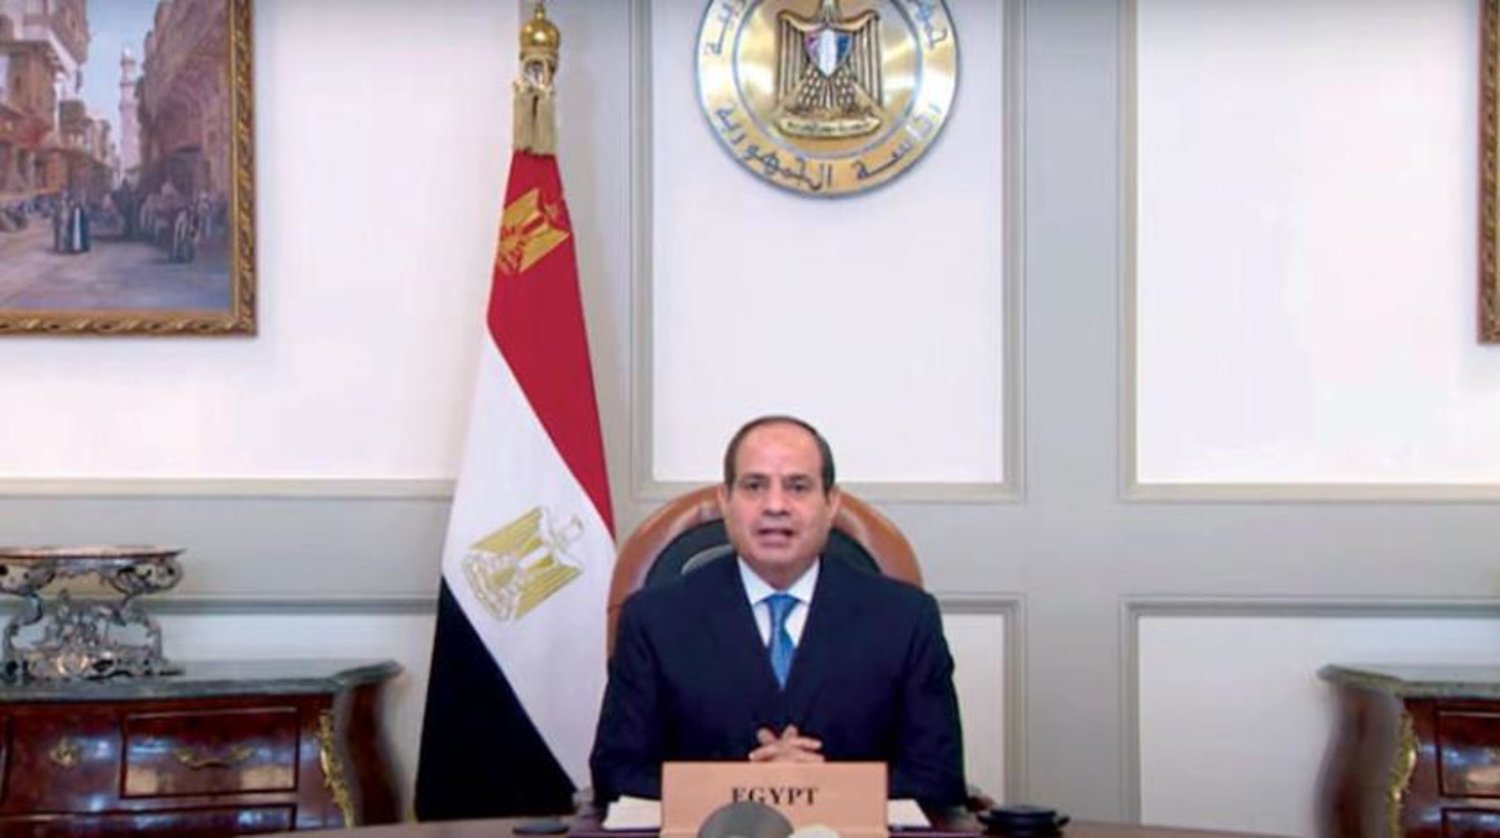 Mısır Cumhurbaşkanı Abdulfettah es-Sisi konuşması sırasında (Cumhurbaşkanlığı)